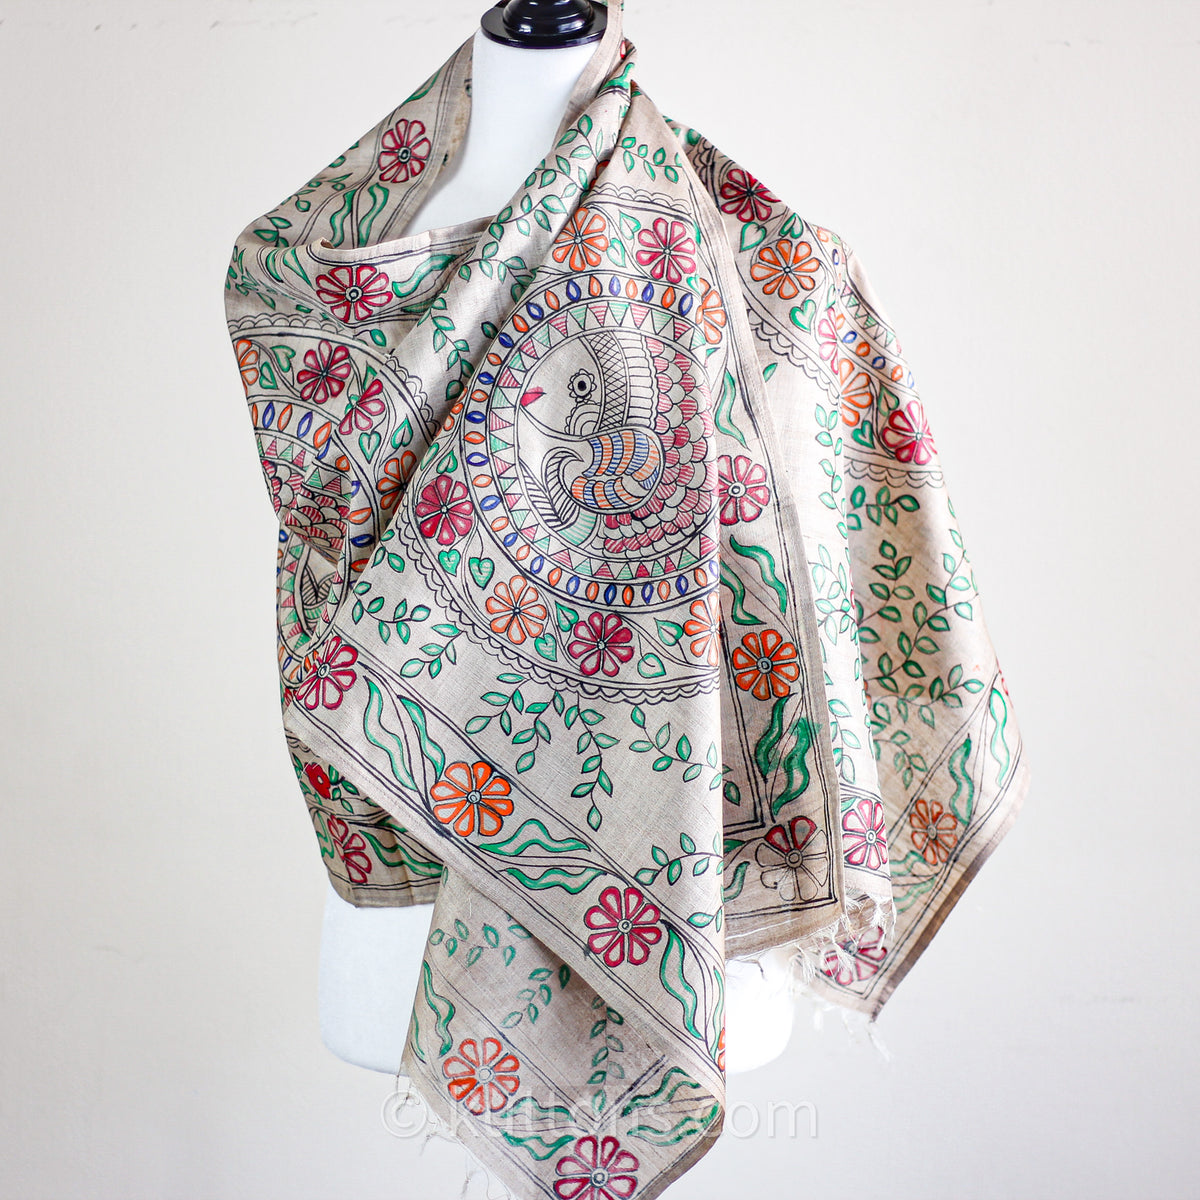 Ethnic Hand Painted Madhubani Stole - Khincha Silk Handloom Wrap